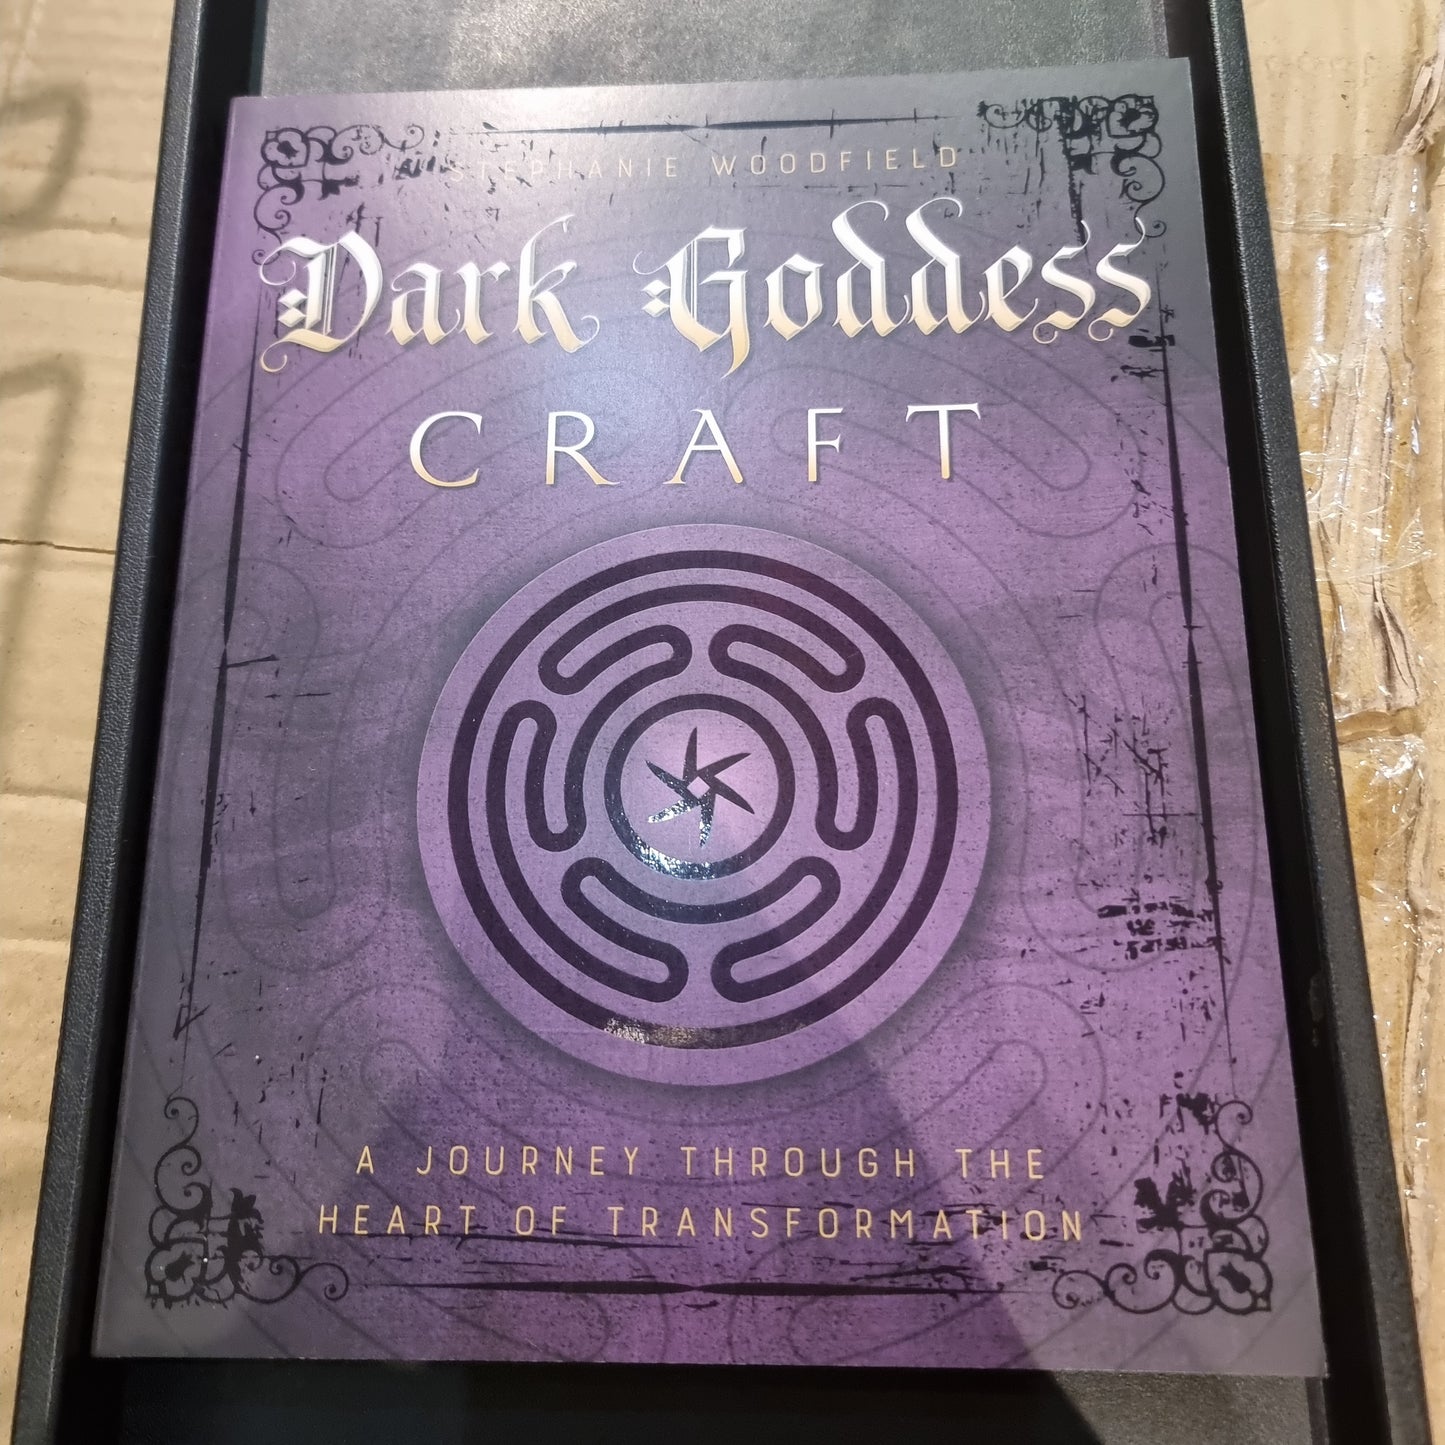 Dark goddess craft PB - Rivendell Shop